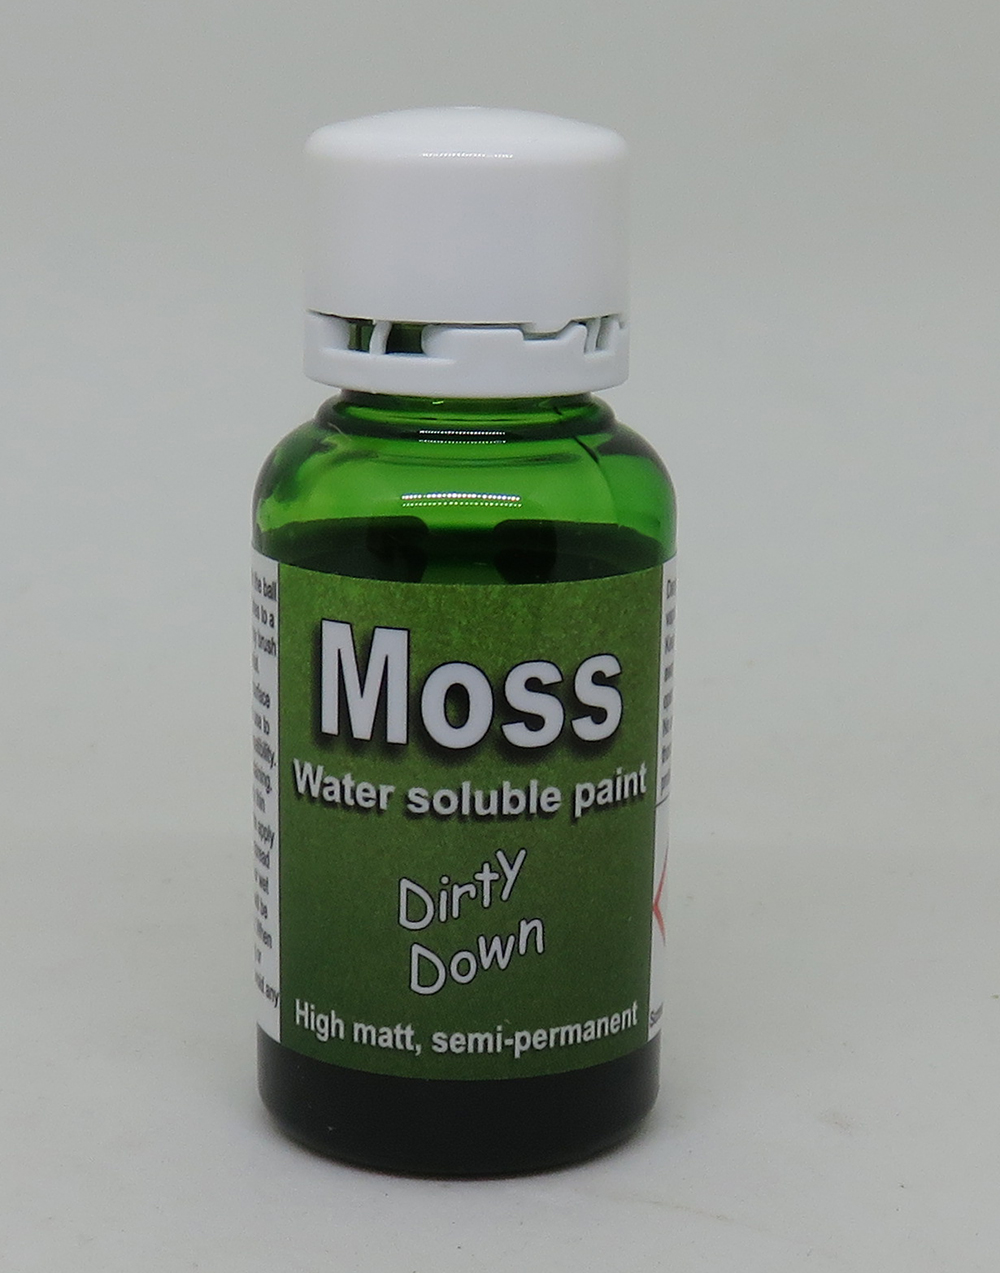 Dirty Down Moss 25ml bottle